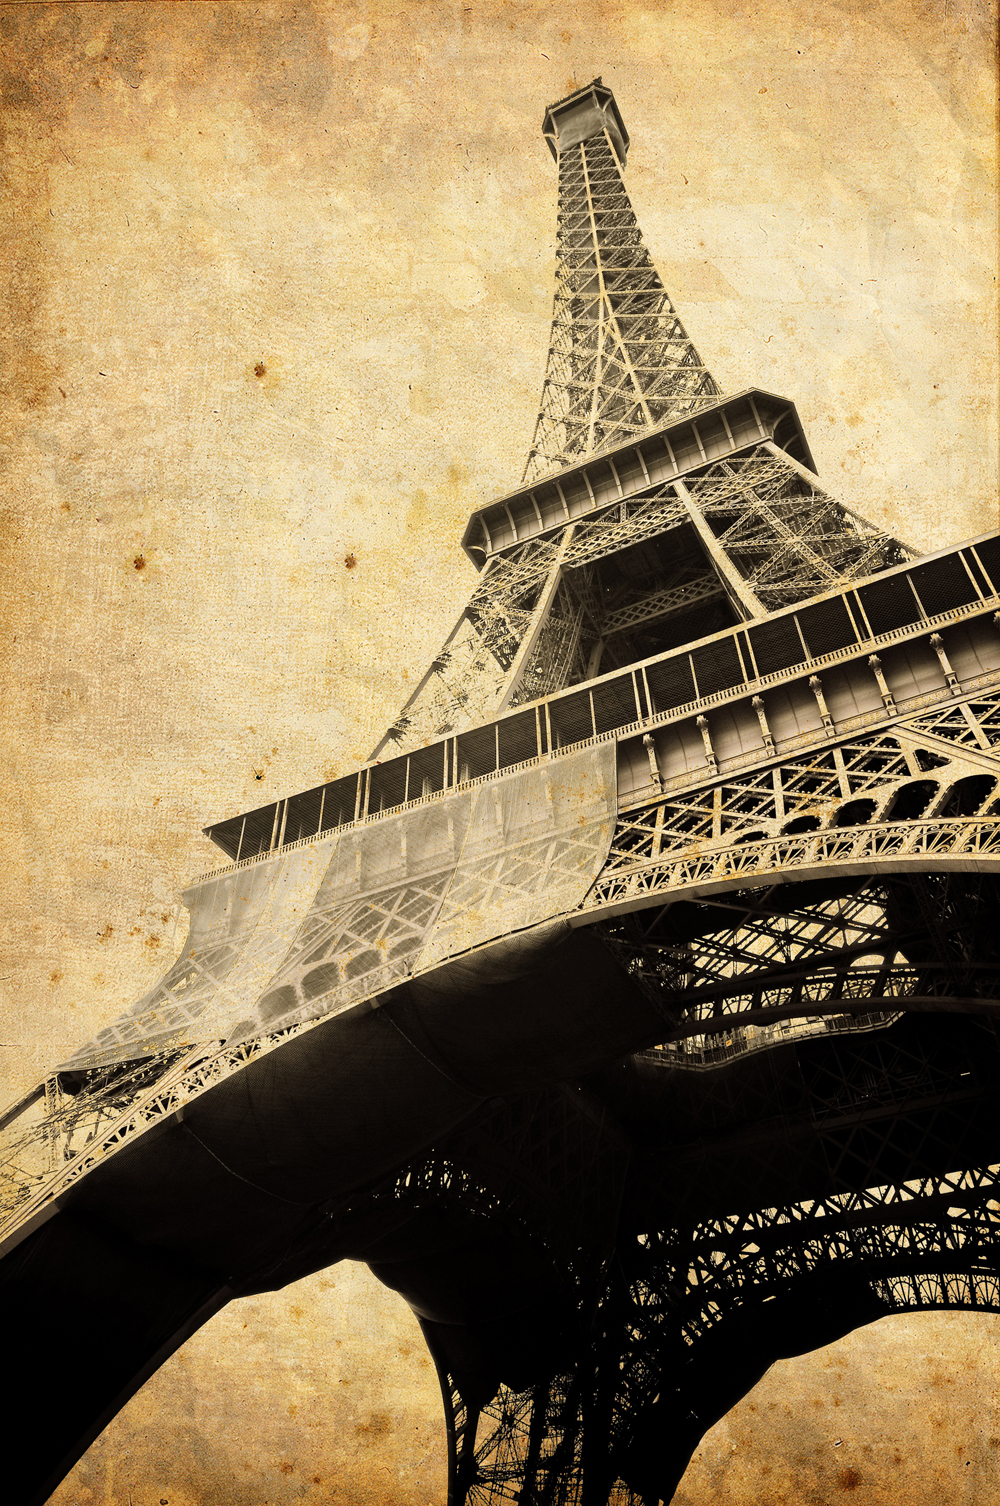 Vintage Eiffel Tower Wallpaper